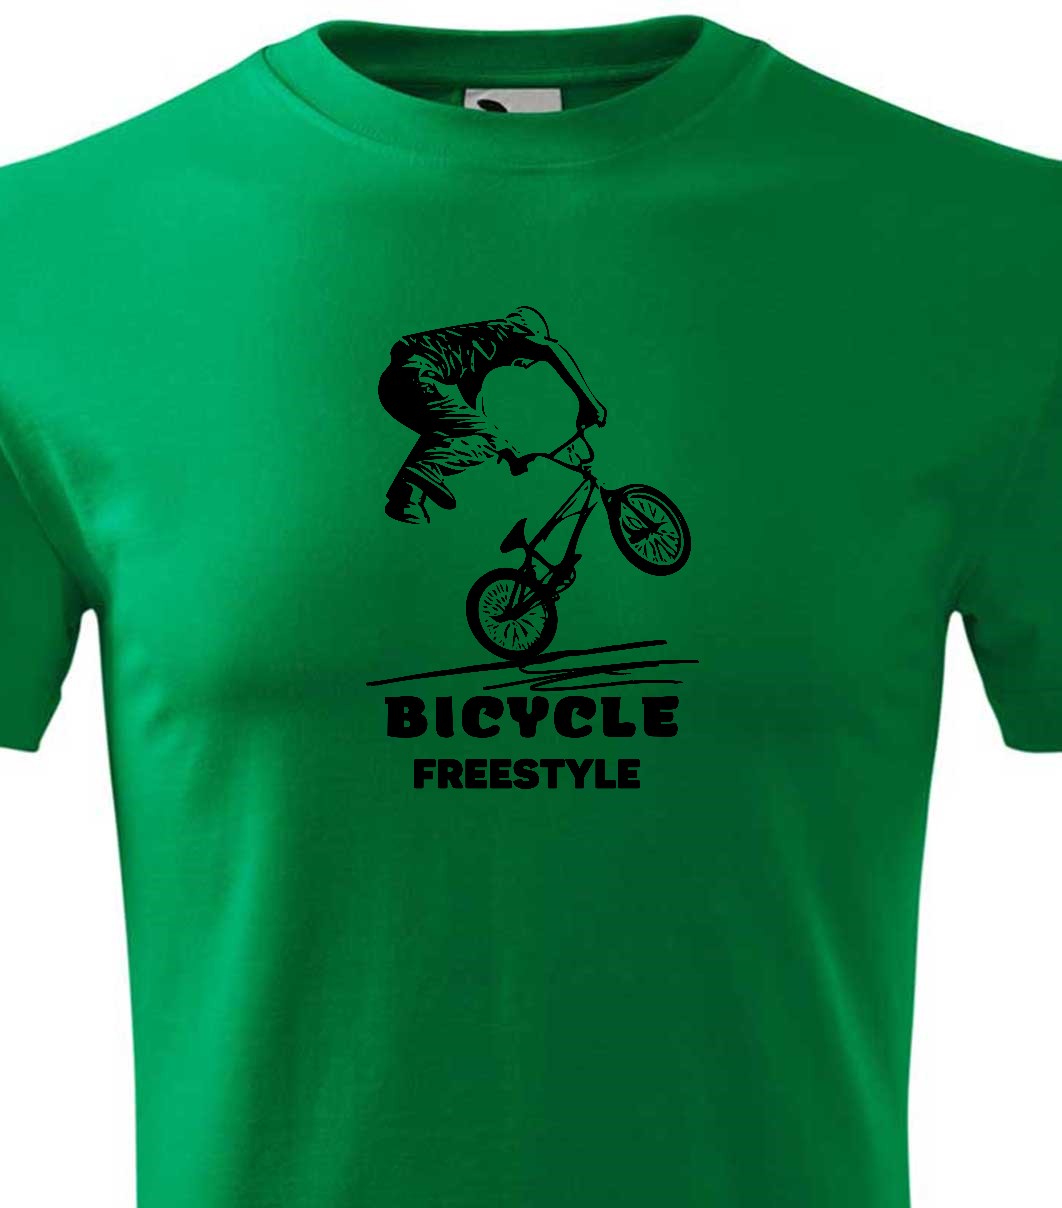 Bicycle freestyle gyerek technikai póló